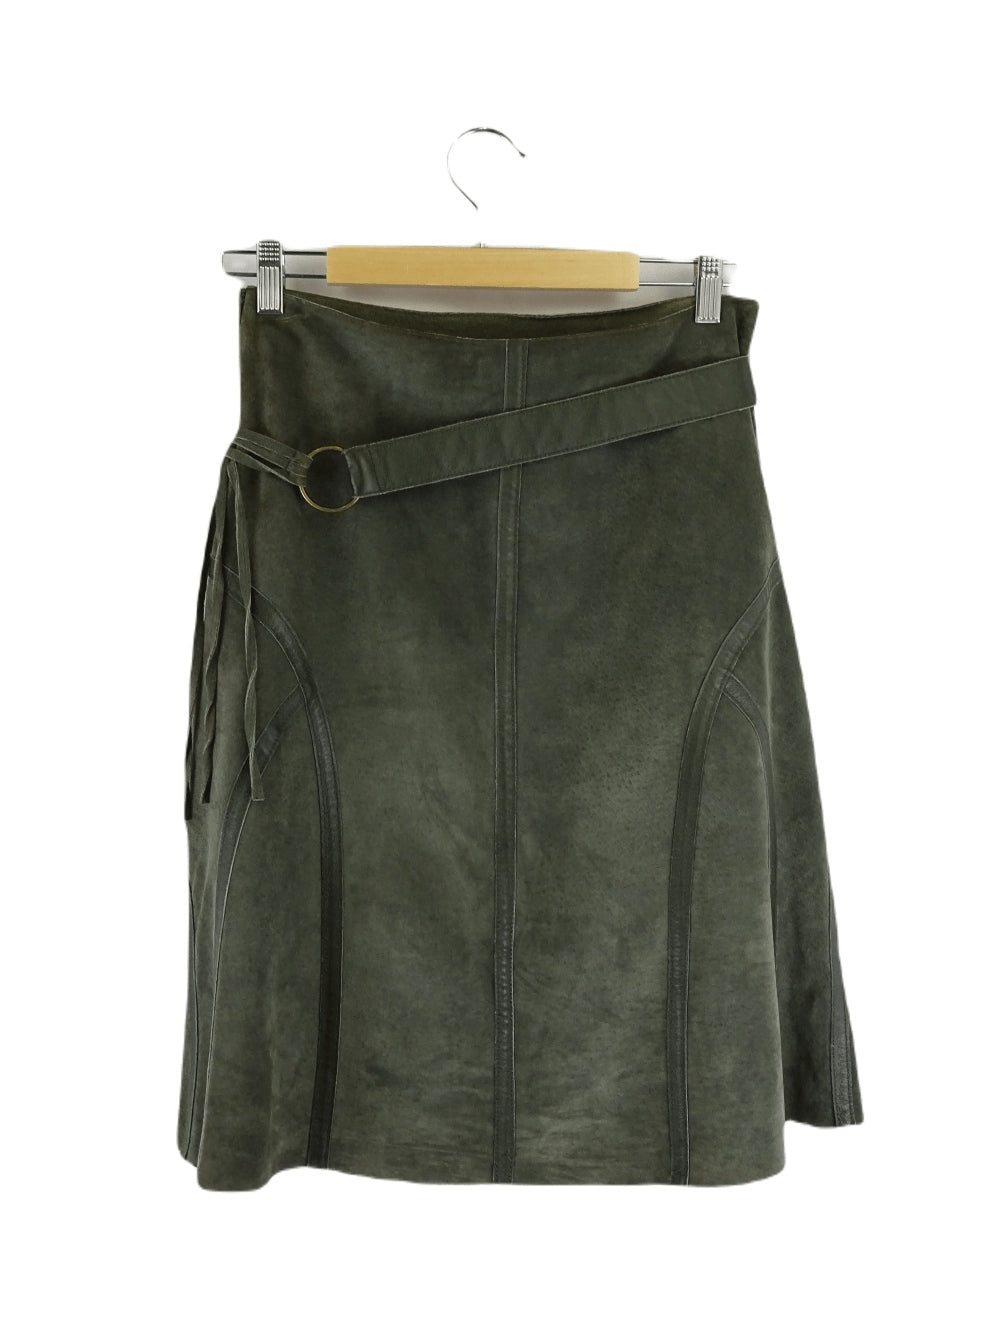 Promod Olive Green Suede Midi Skirt 8